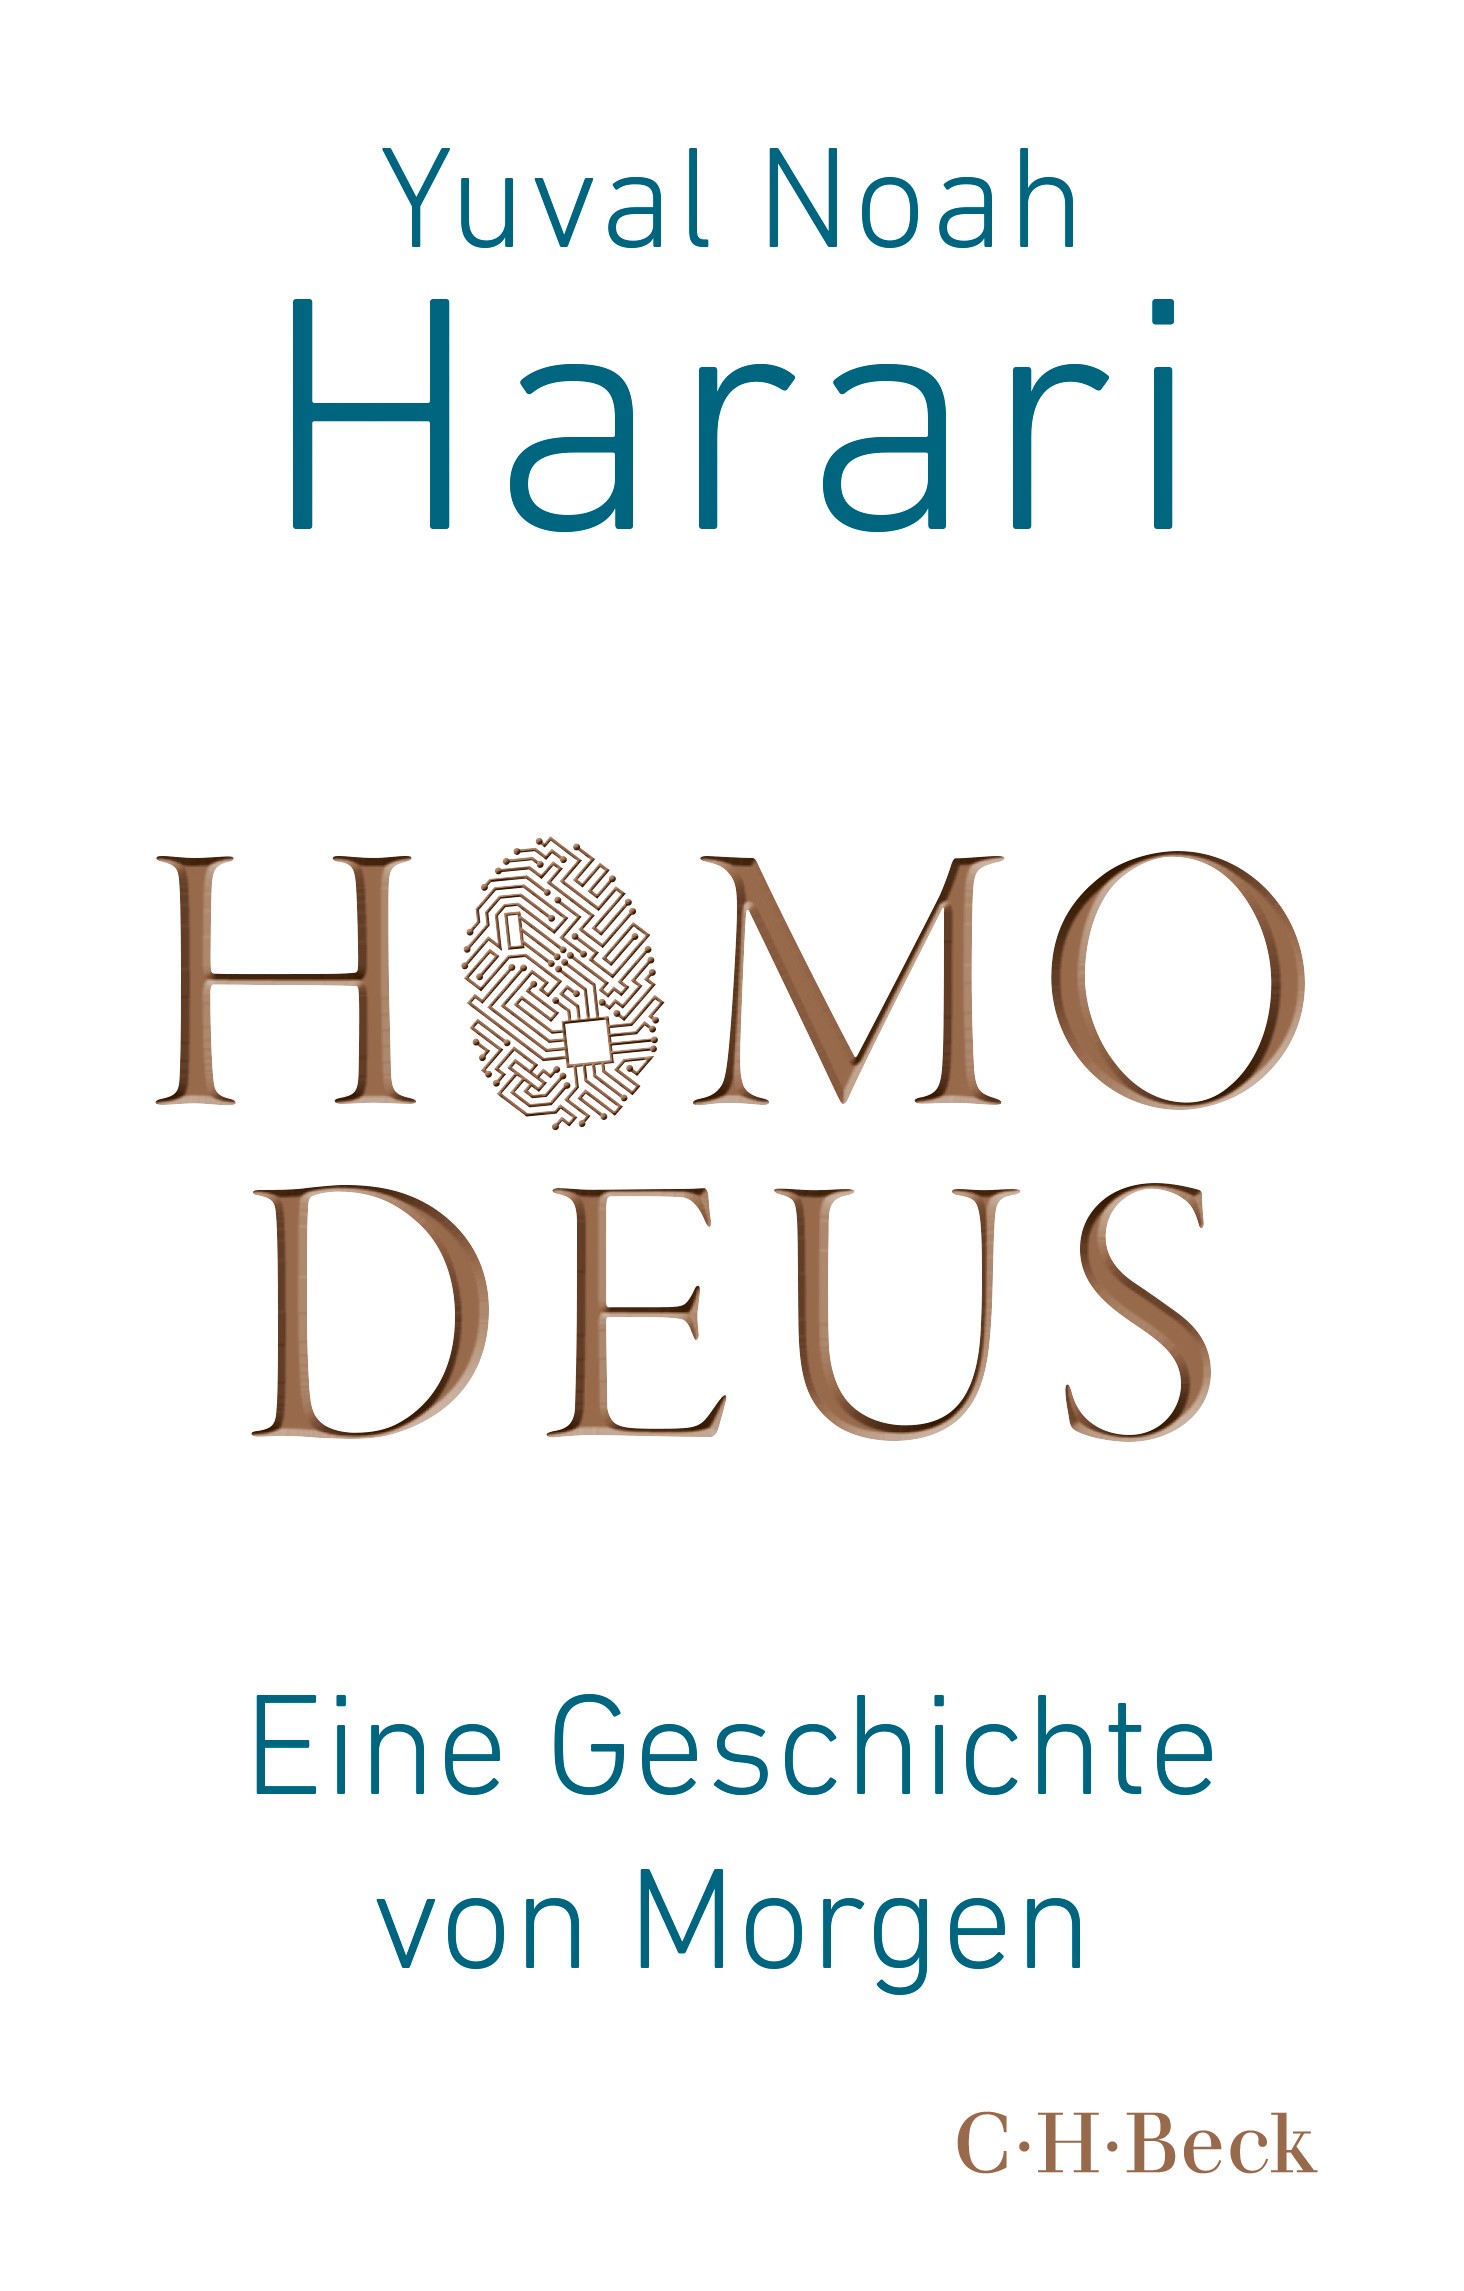 Cover: Harari, Yuval Noah, Homo Deus